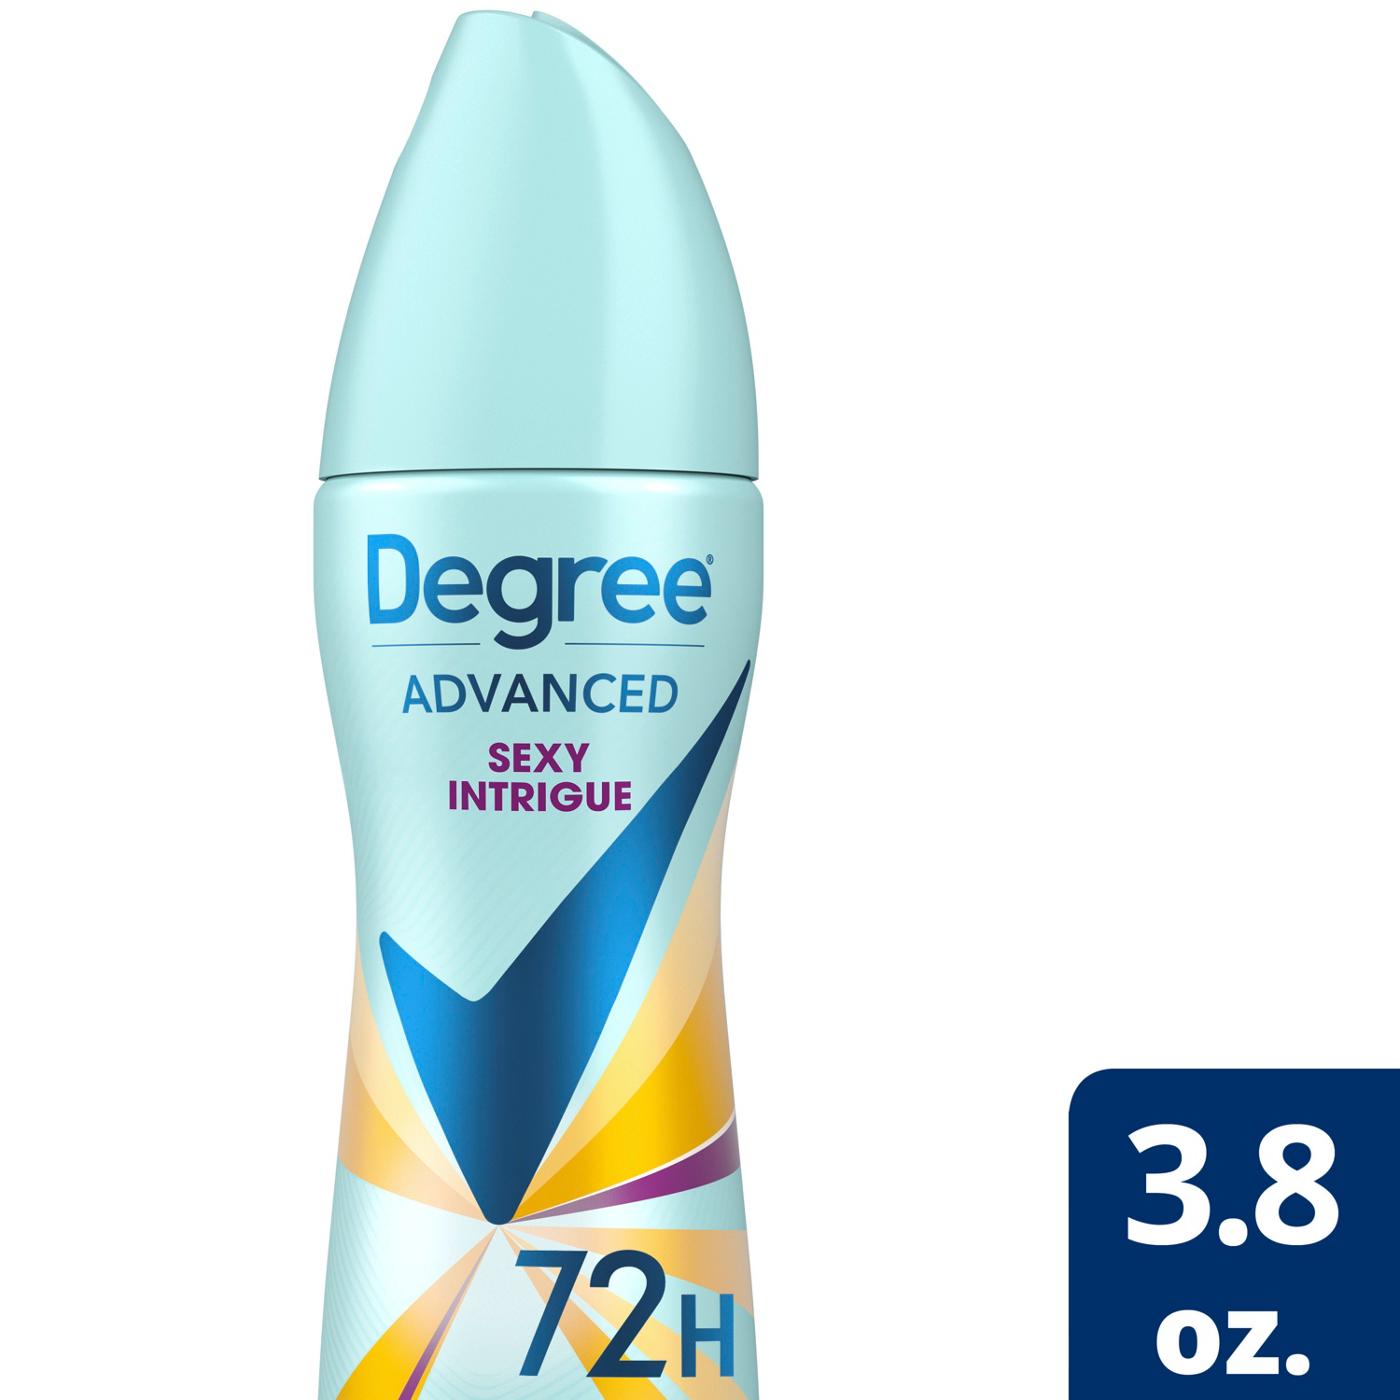 Degree Advanced Antiperspirant Deodorant Dry Spray Sexy Intrigue; image 2 of 3